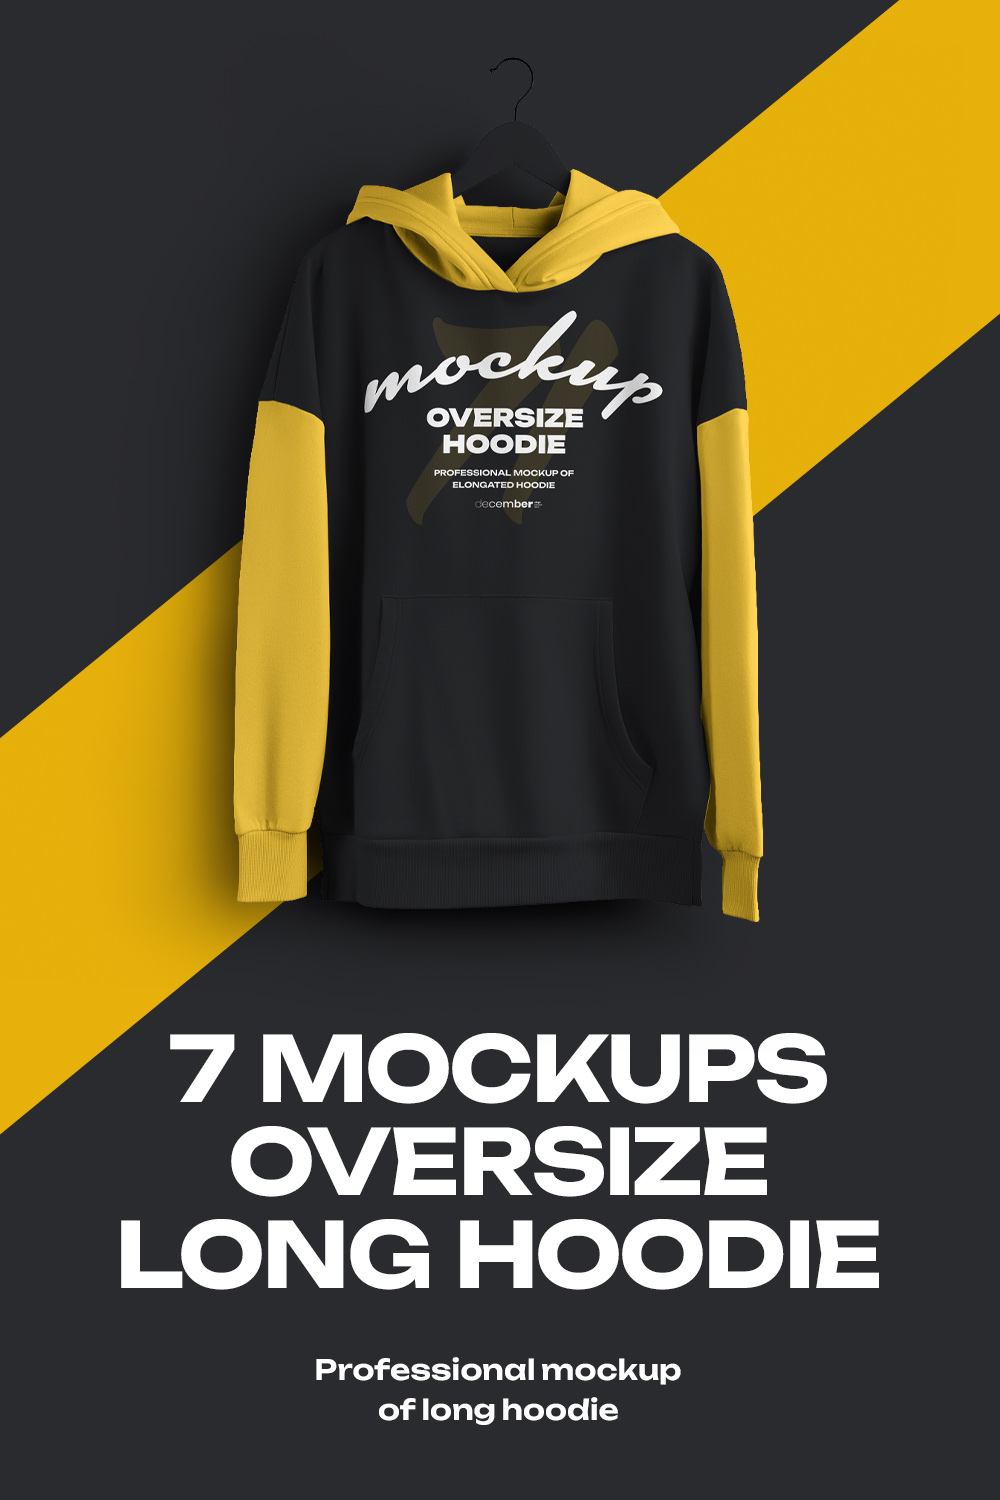 7 Mockups Oversize Long Hoodies pinterest preview image.